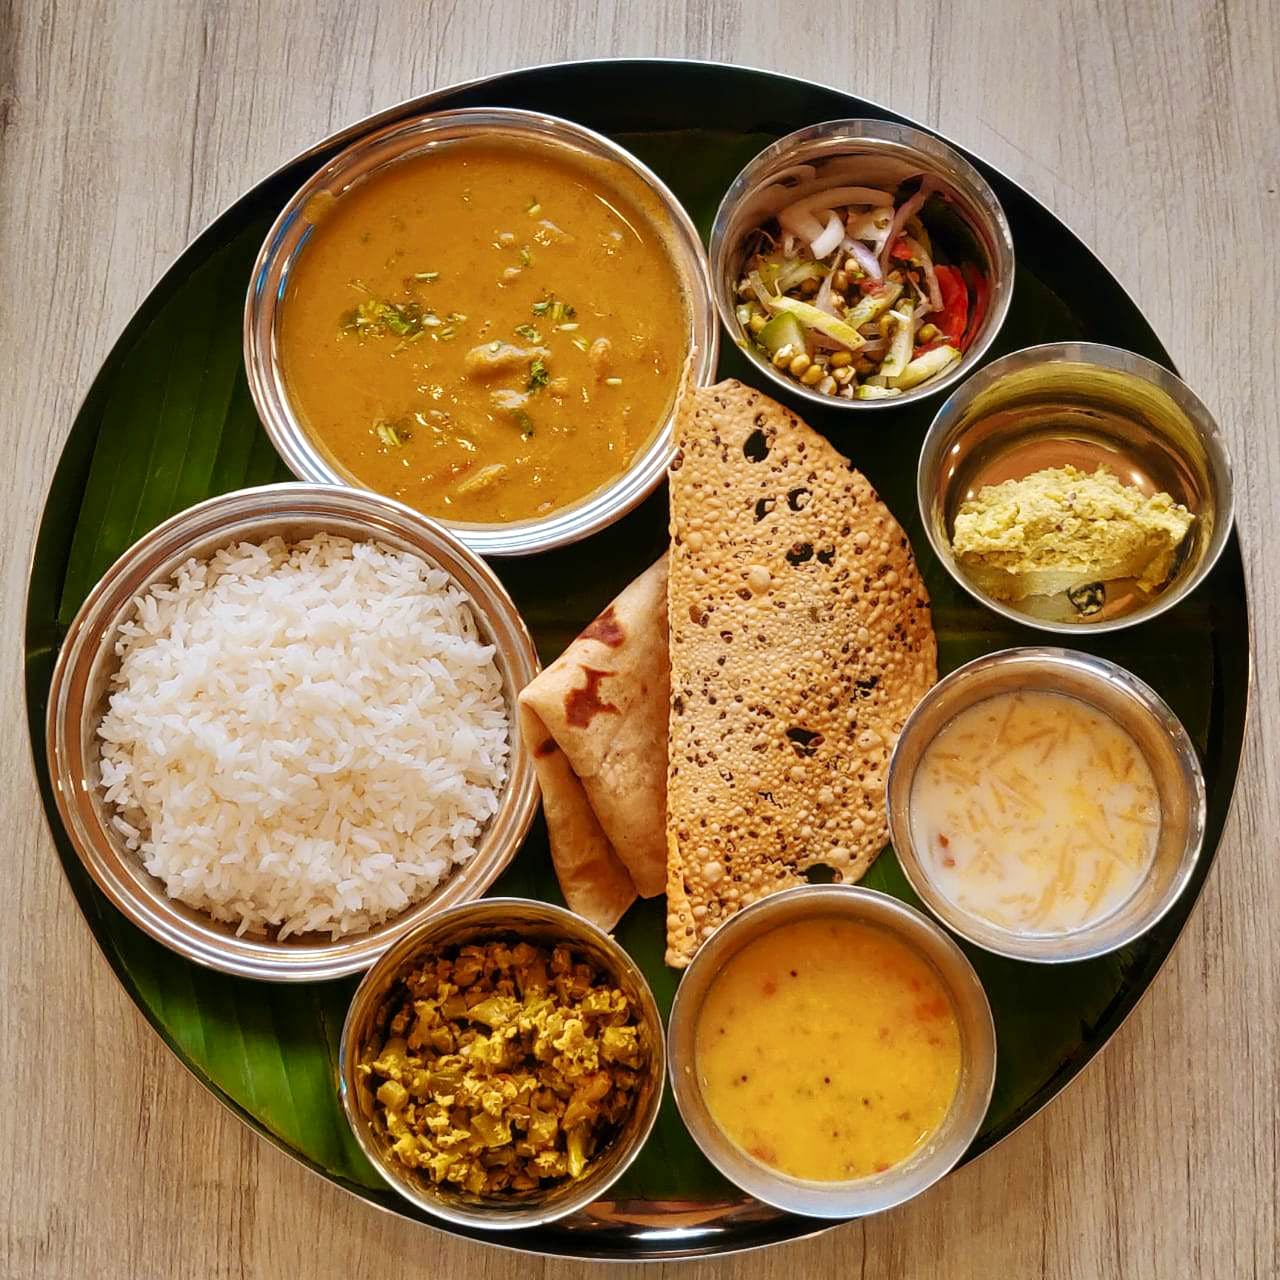 Dish,Food,Cuisine,Ingredient,Meal,Dal,Curry,Lunch,Indian cuisine,Raita